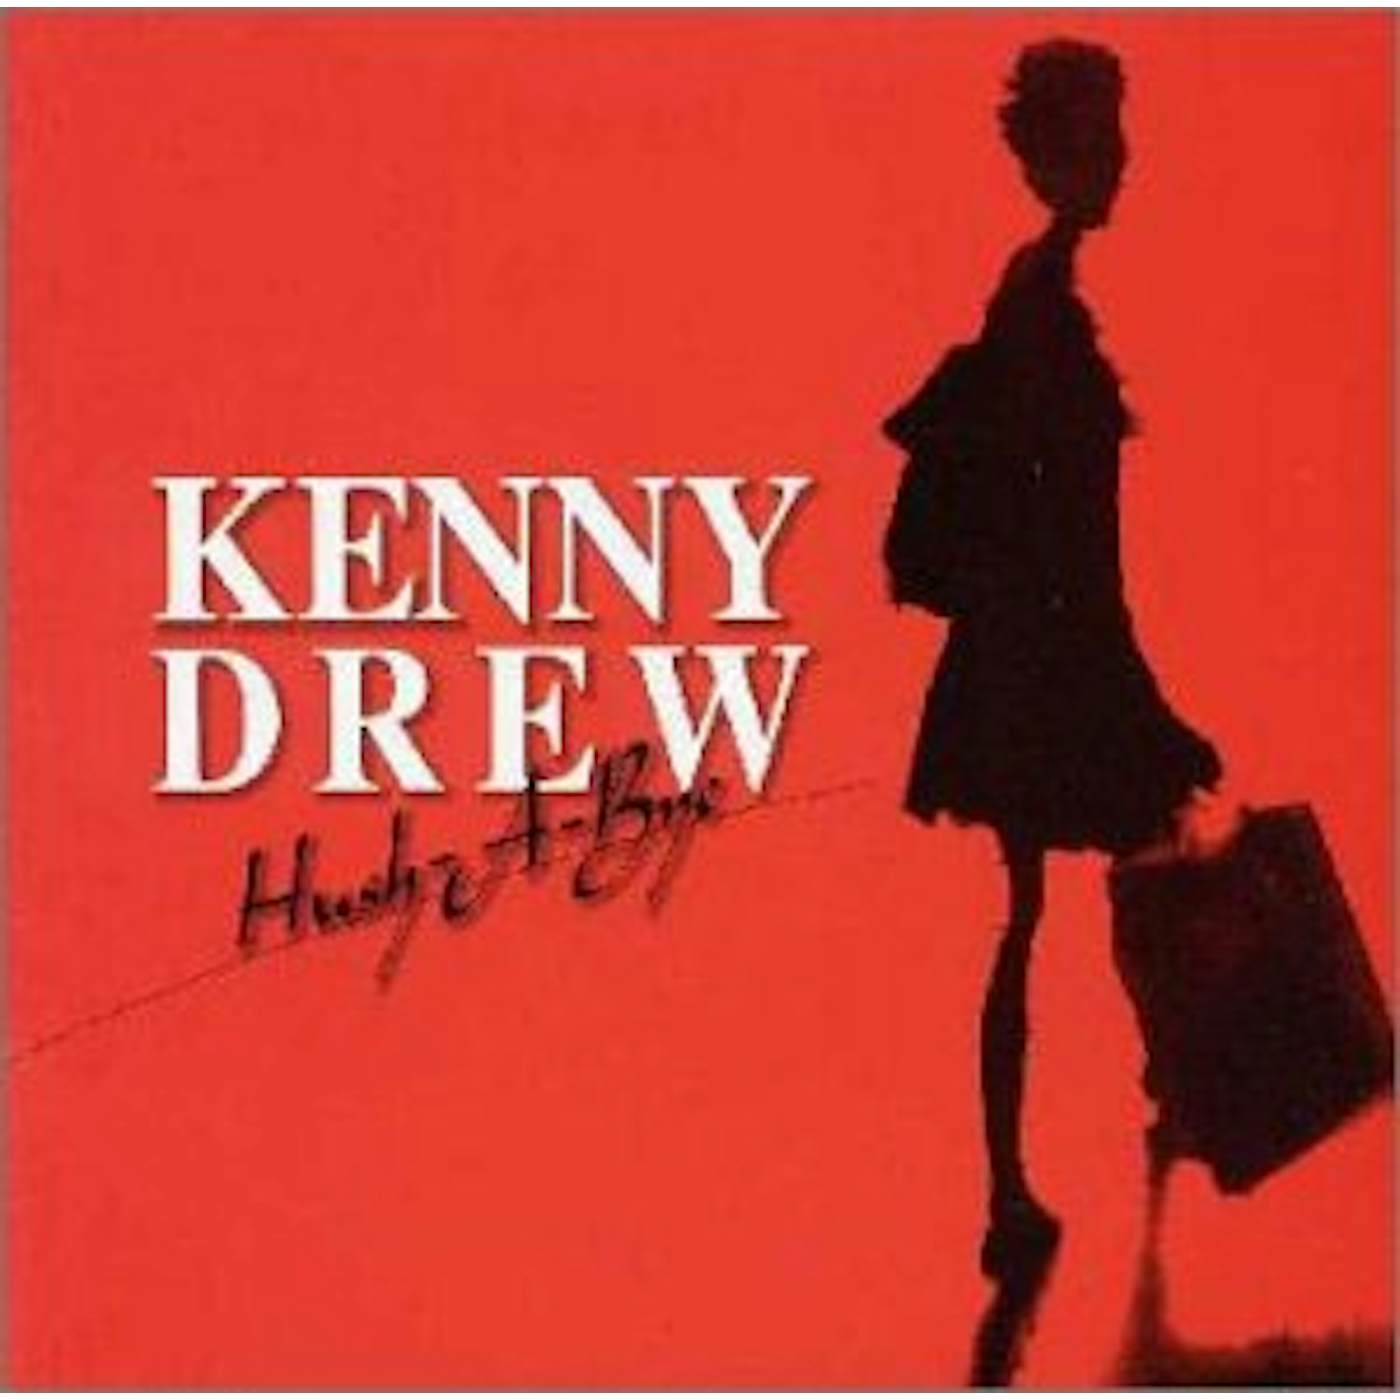 Kenny Drew HUSH-A-BYE CD